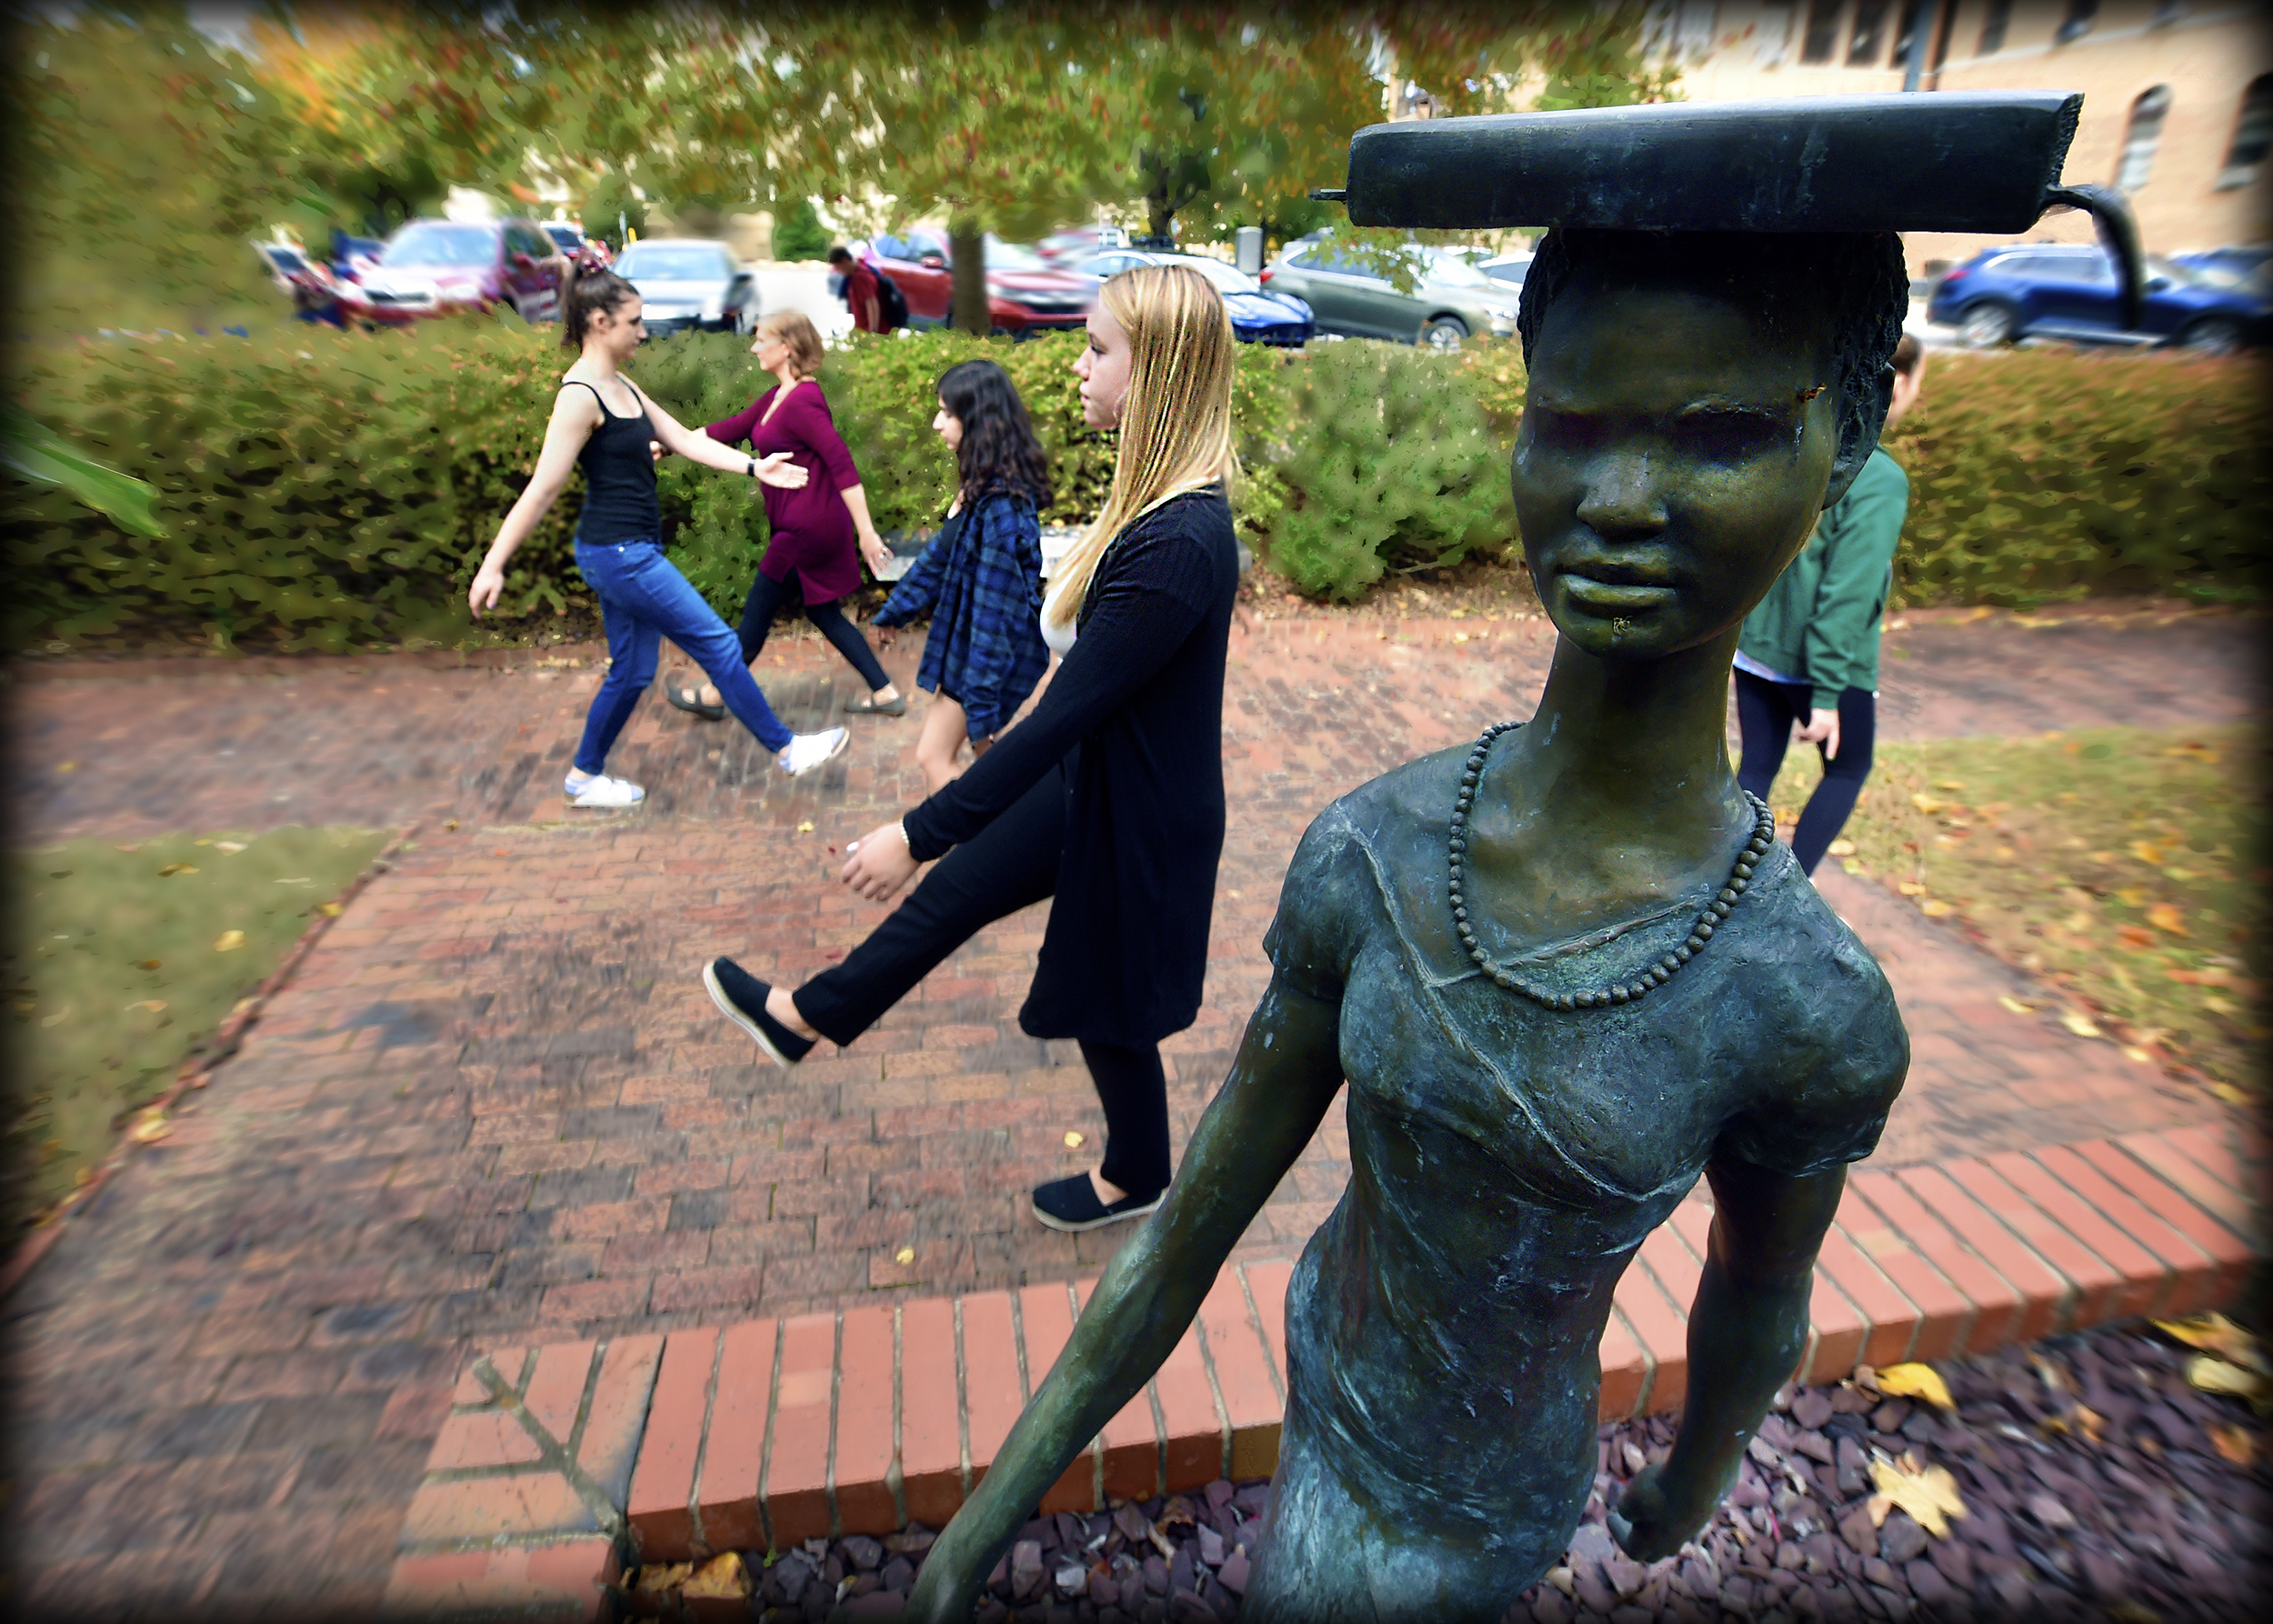 Student dancers dance amid the sculptures in the Hamilton scuplture garden.